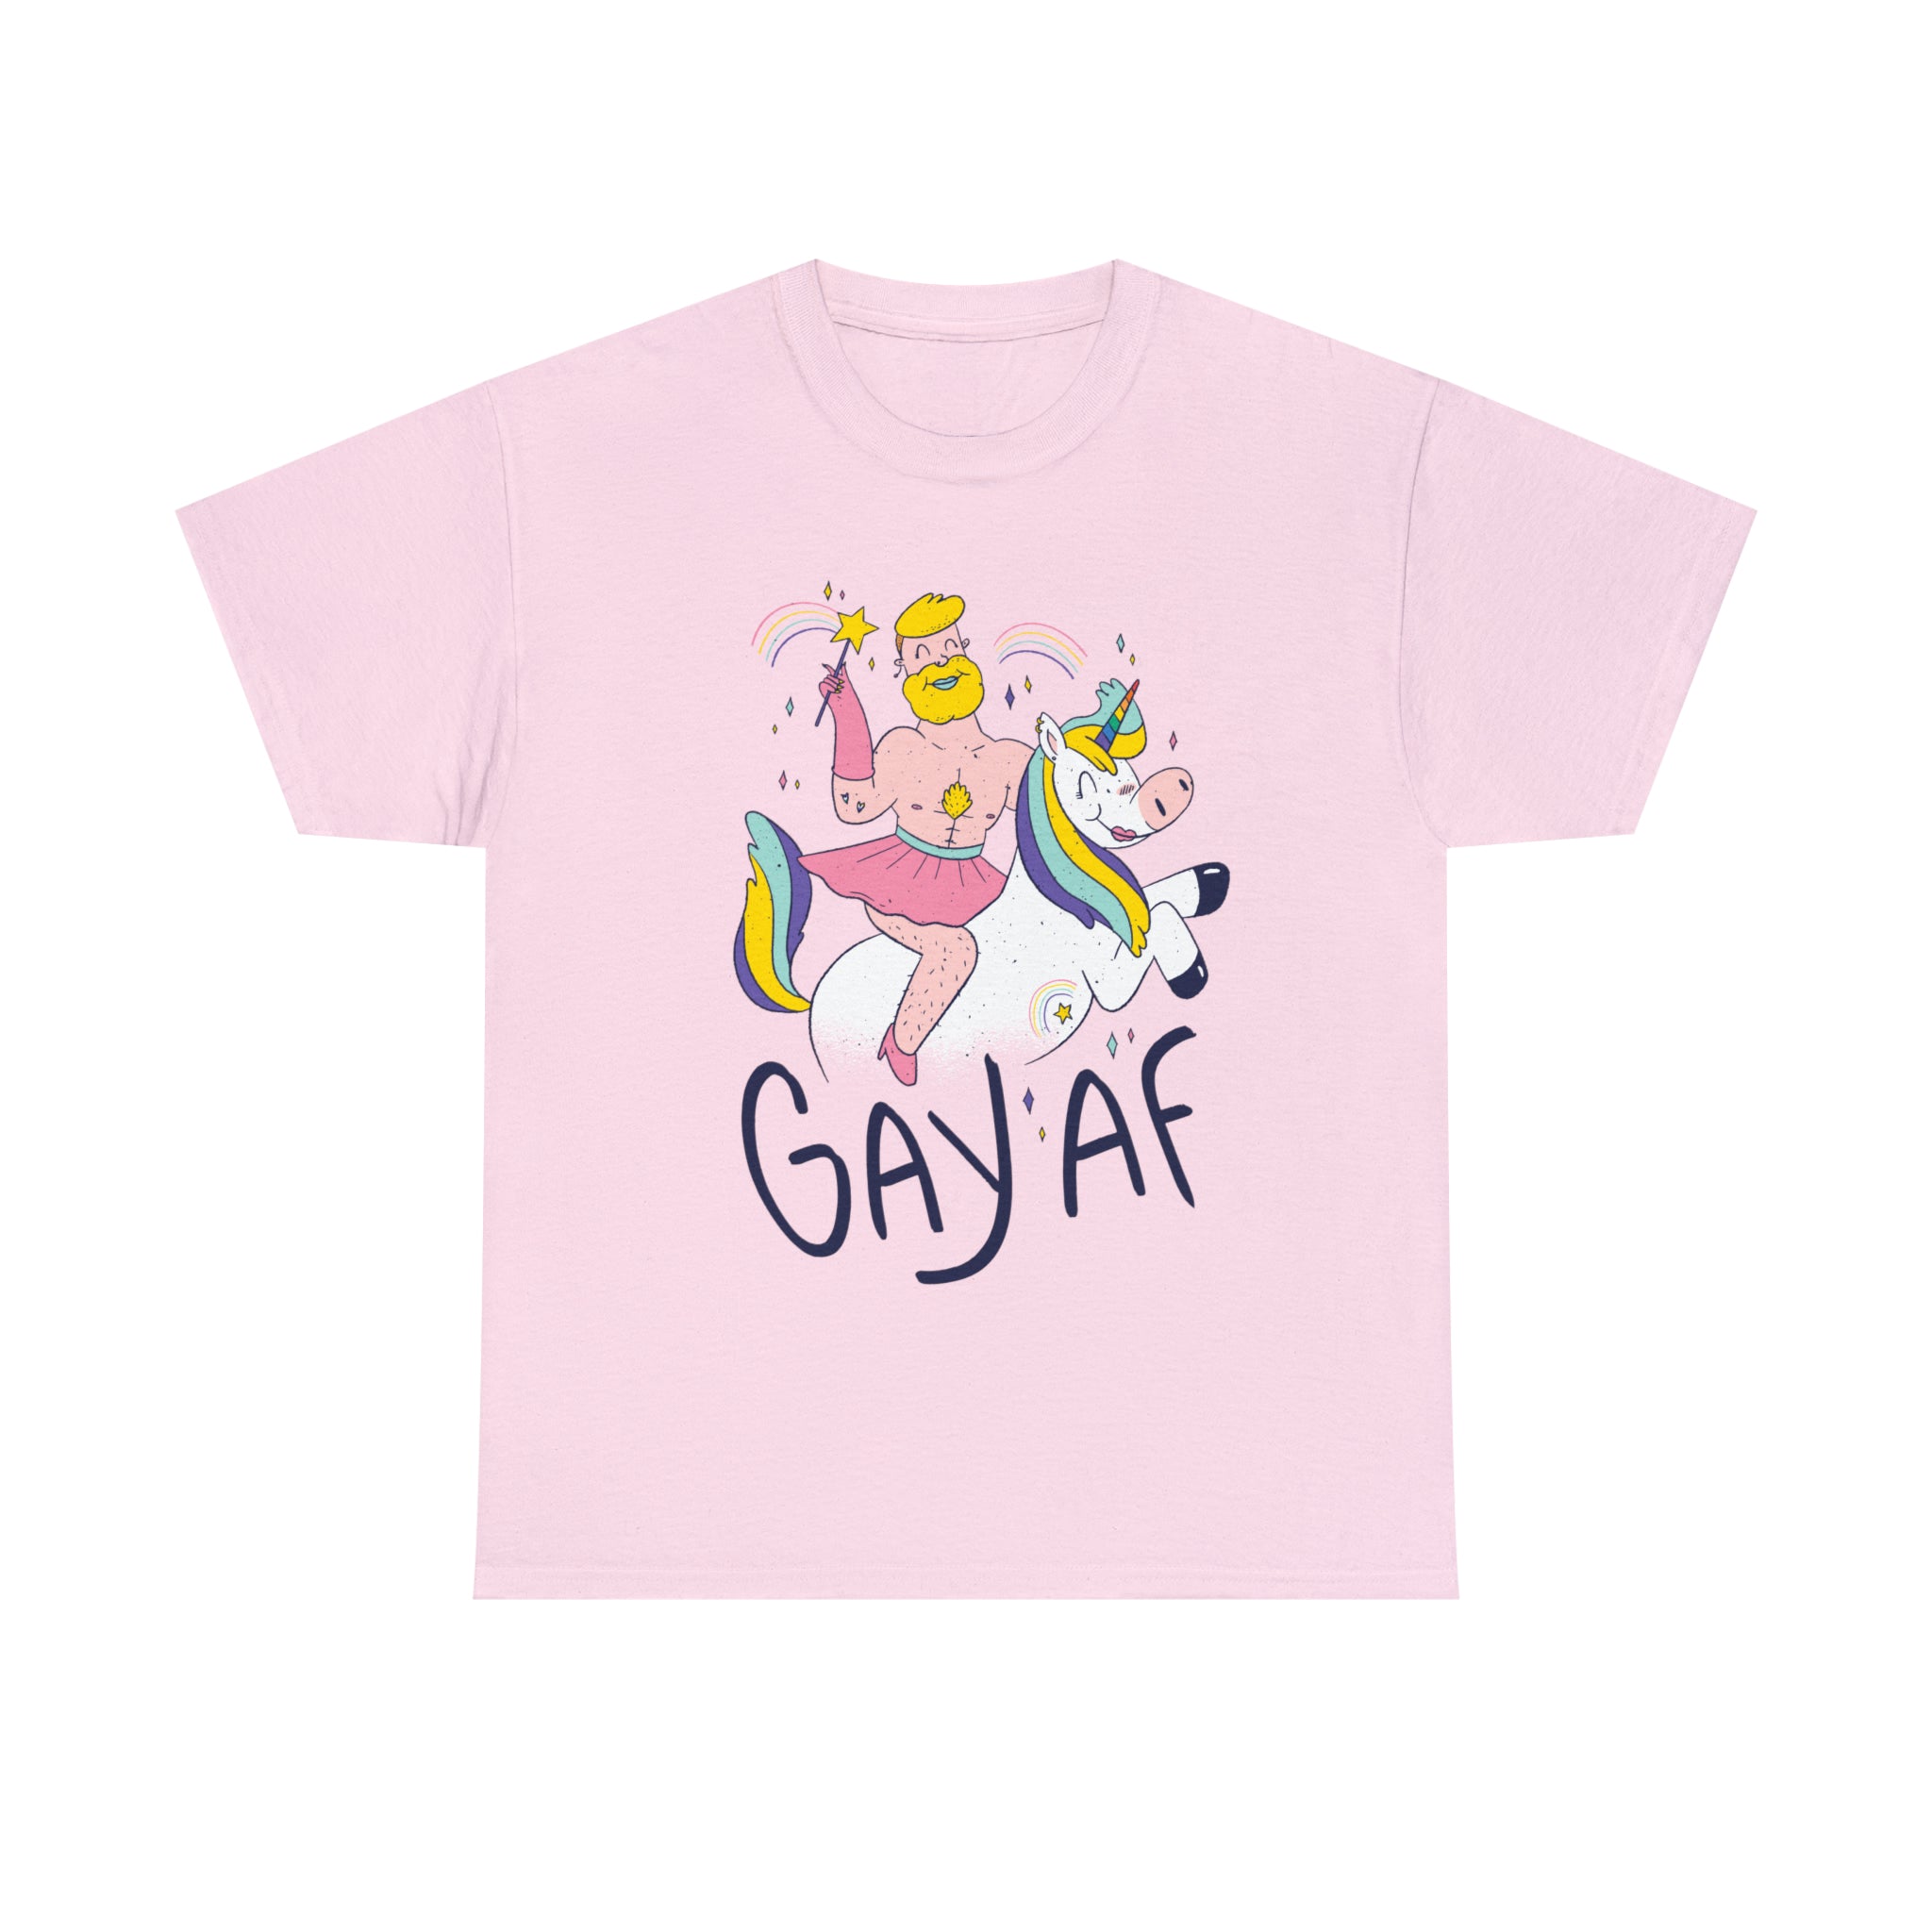 A pink GAYAF T-shirt featuring a man riding a unicorn.